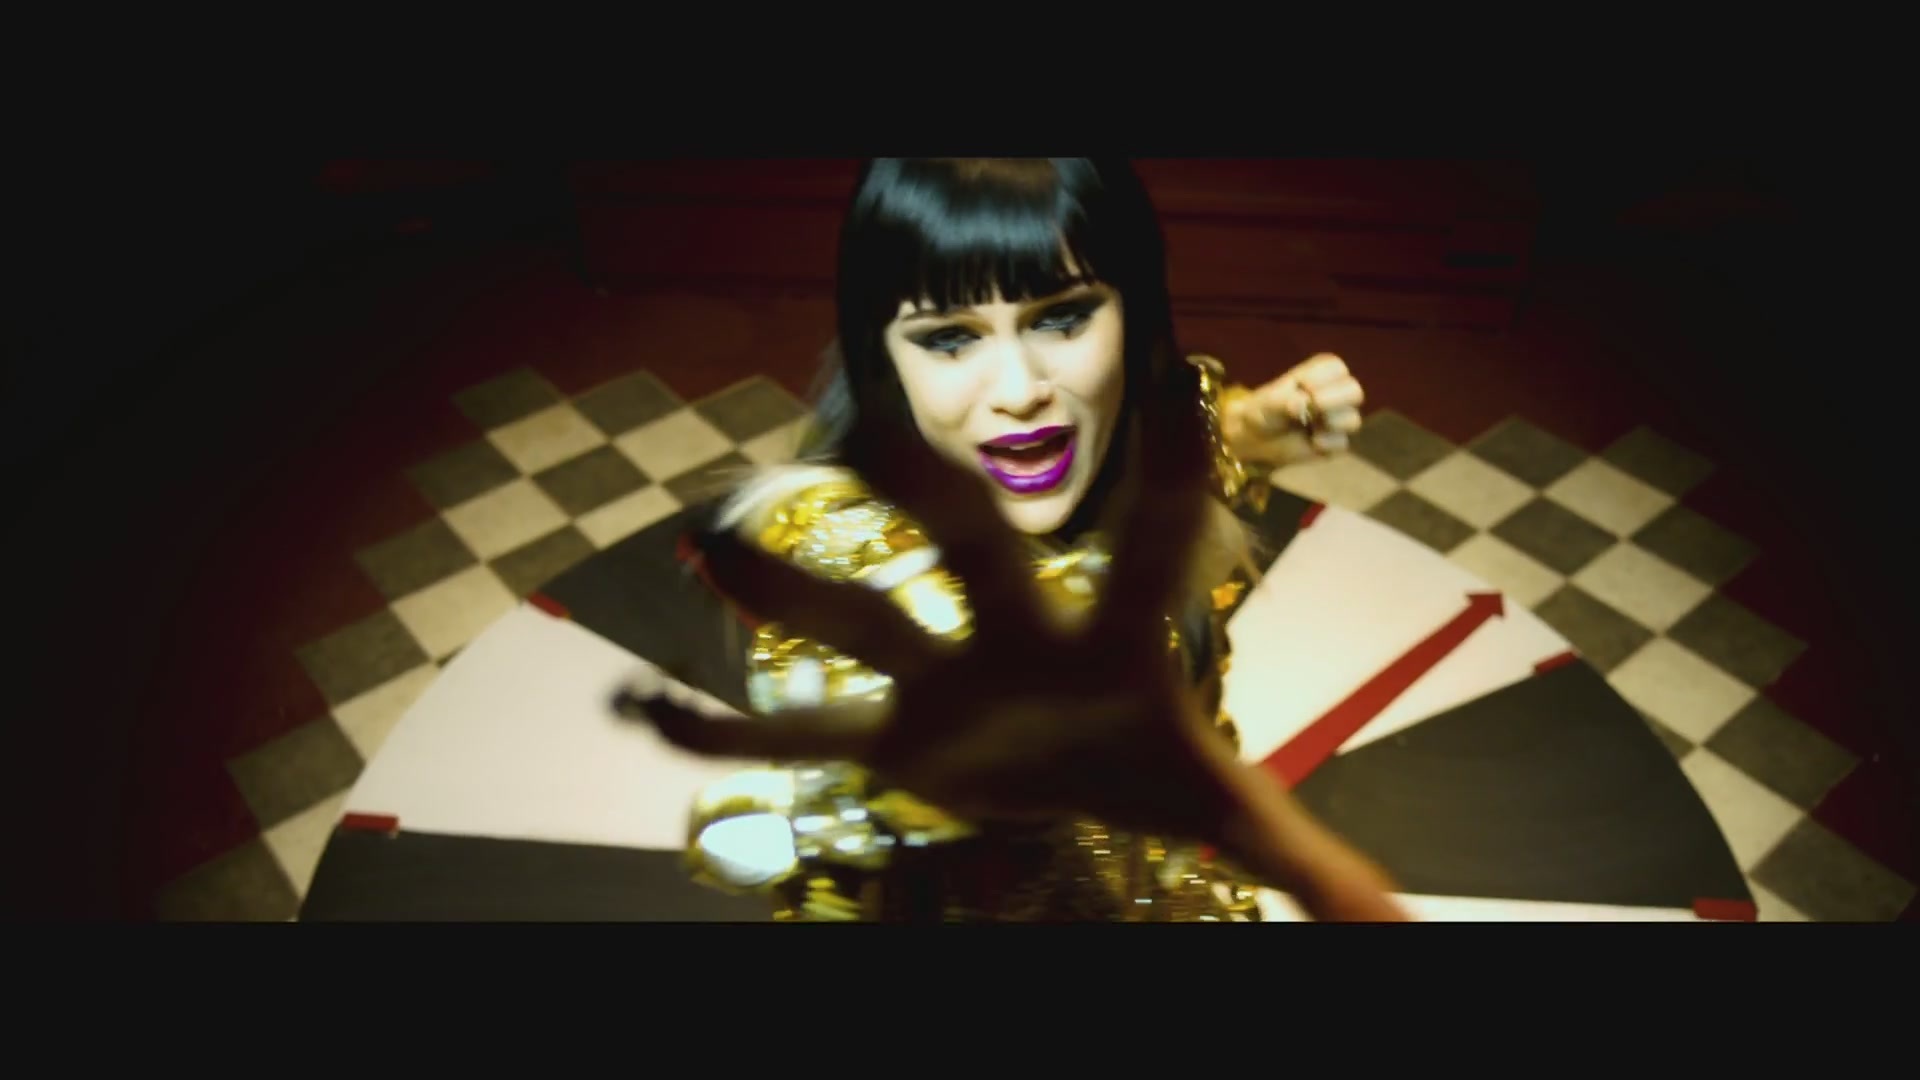 Nobody's Perfect [Music Video] - Jessie J Image (21700052) - Fanpop